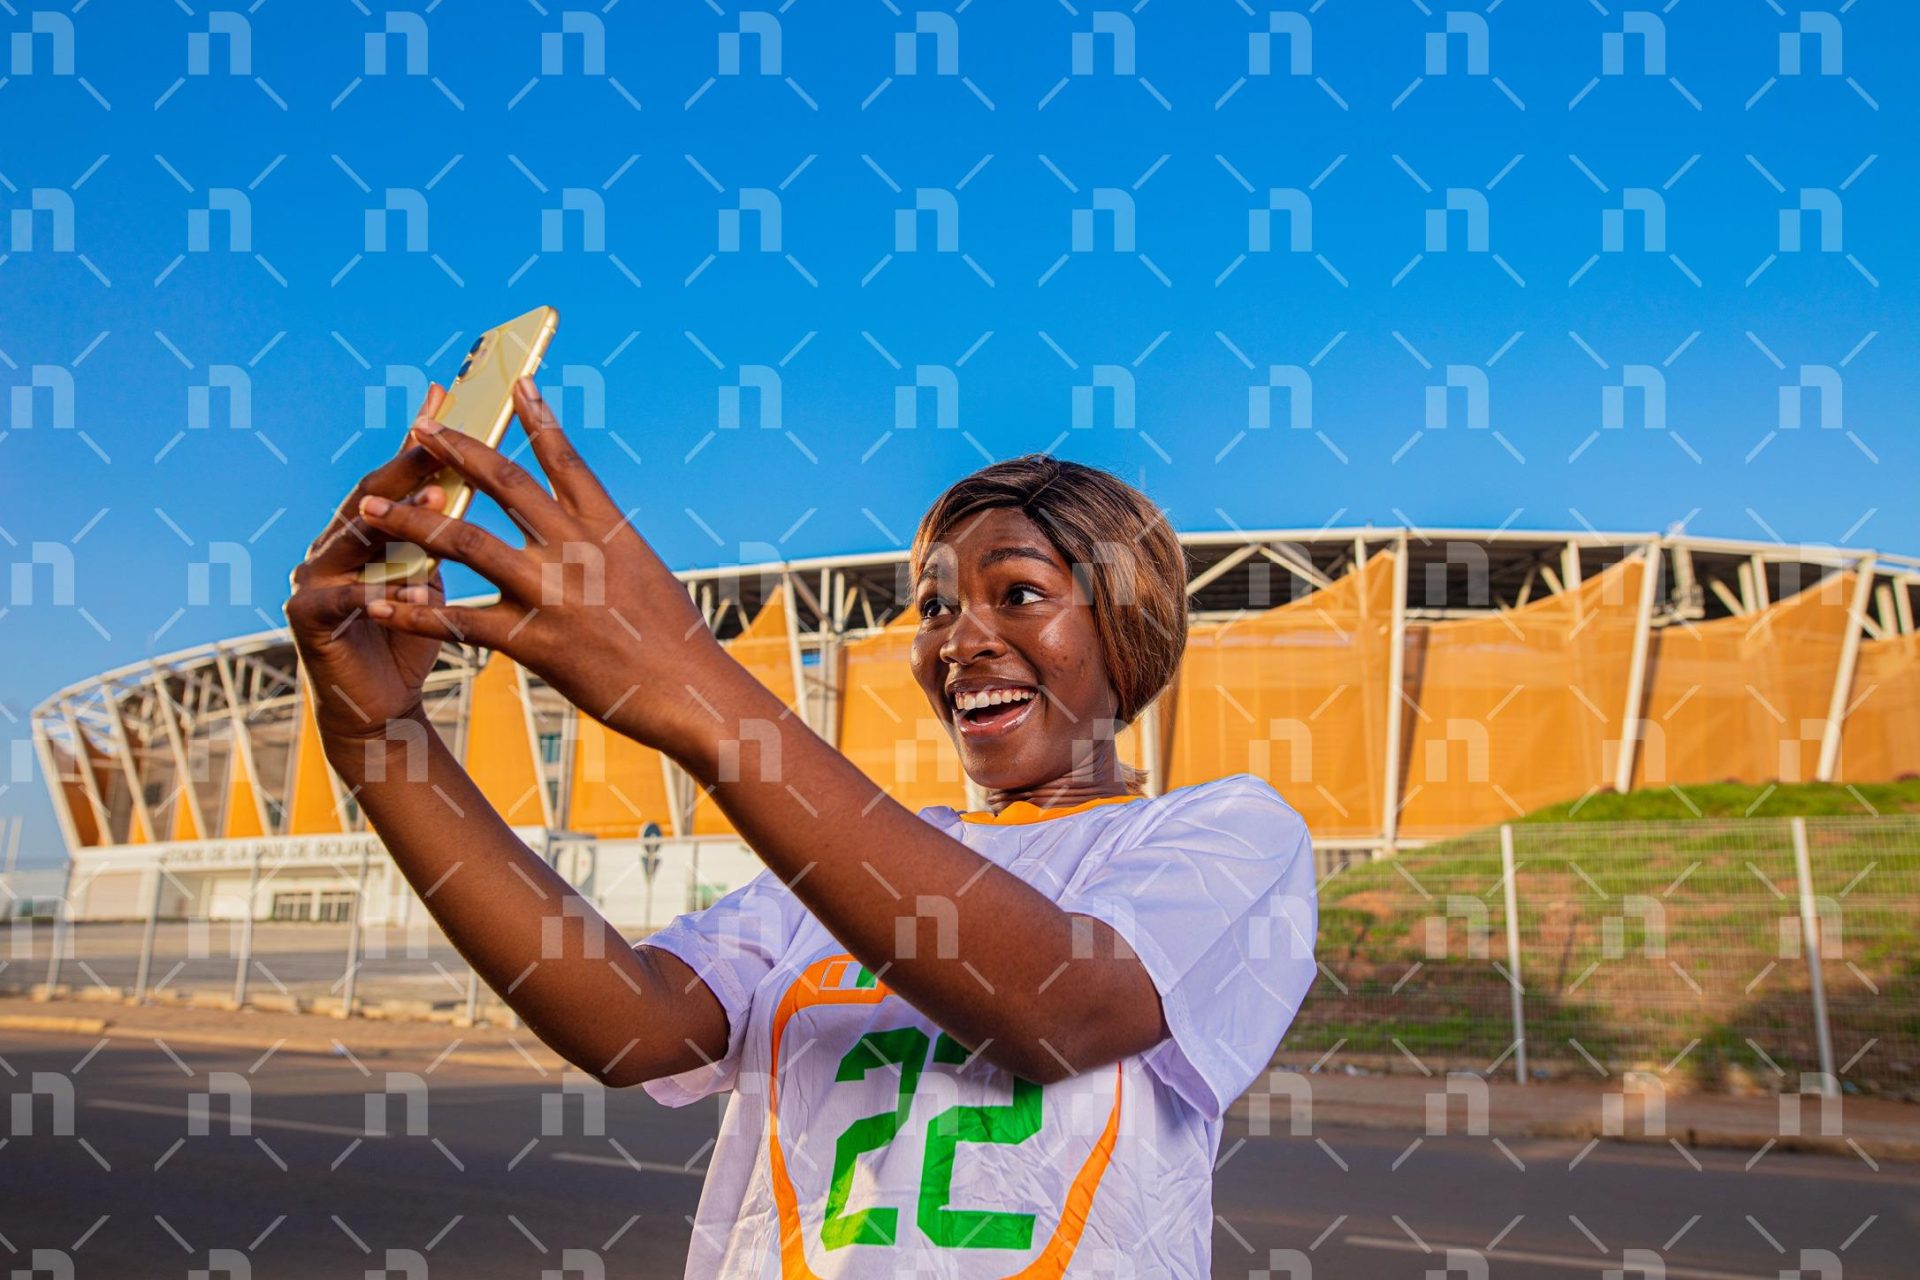 une-supportrice-heureuse-en-mode-selfie-devant-le-stade